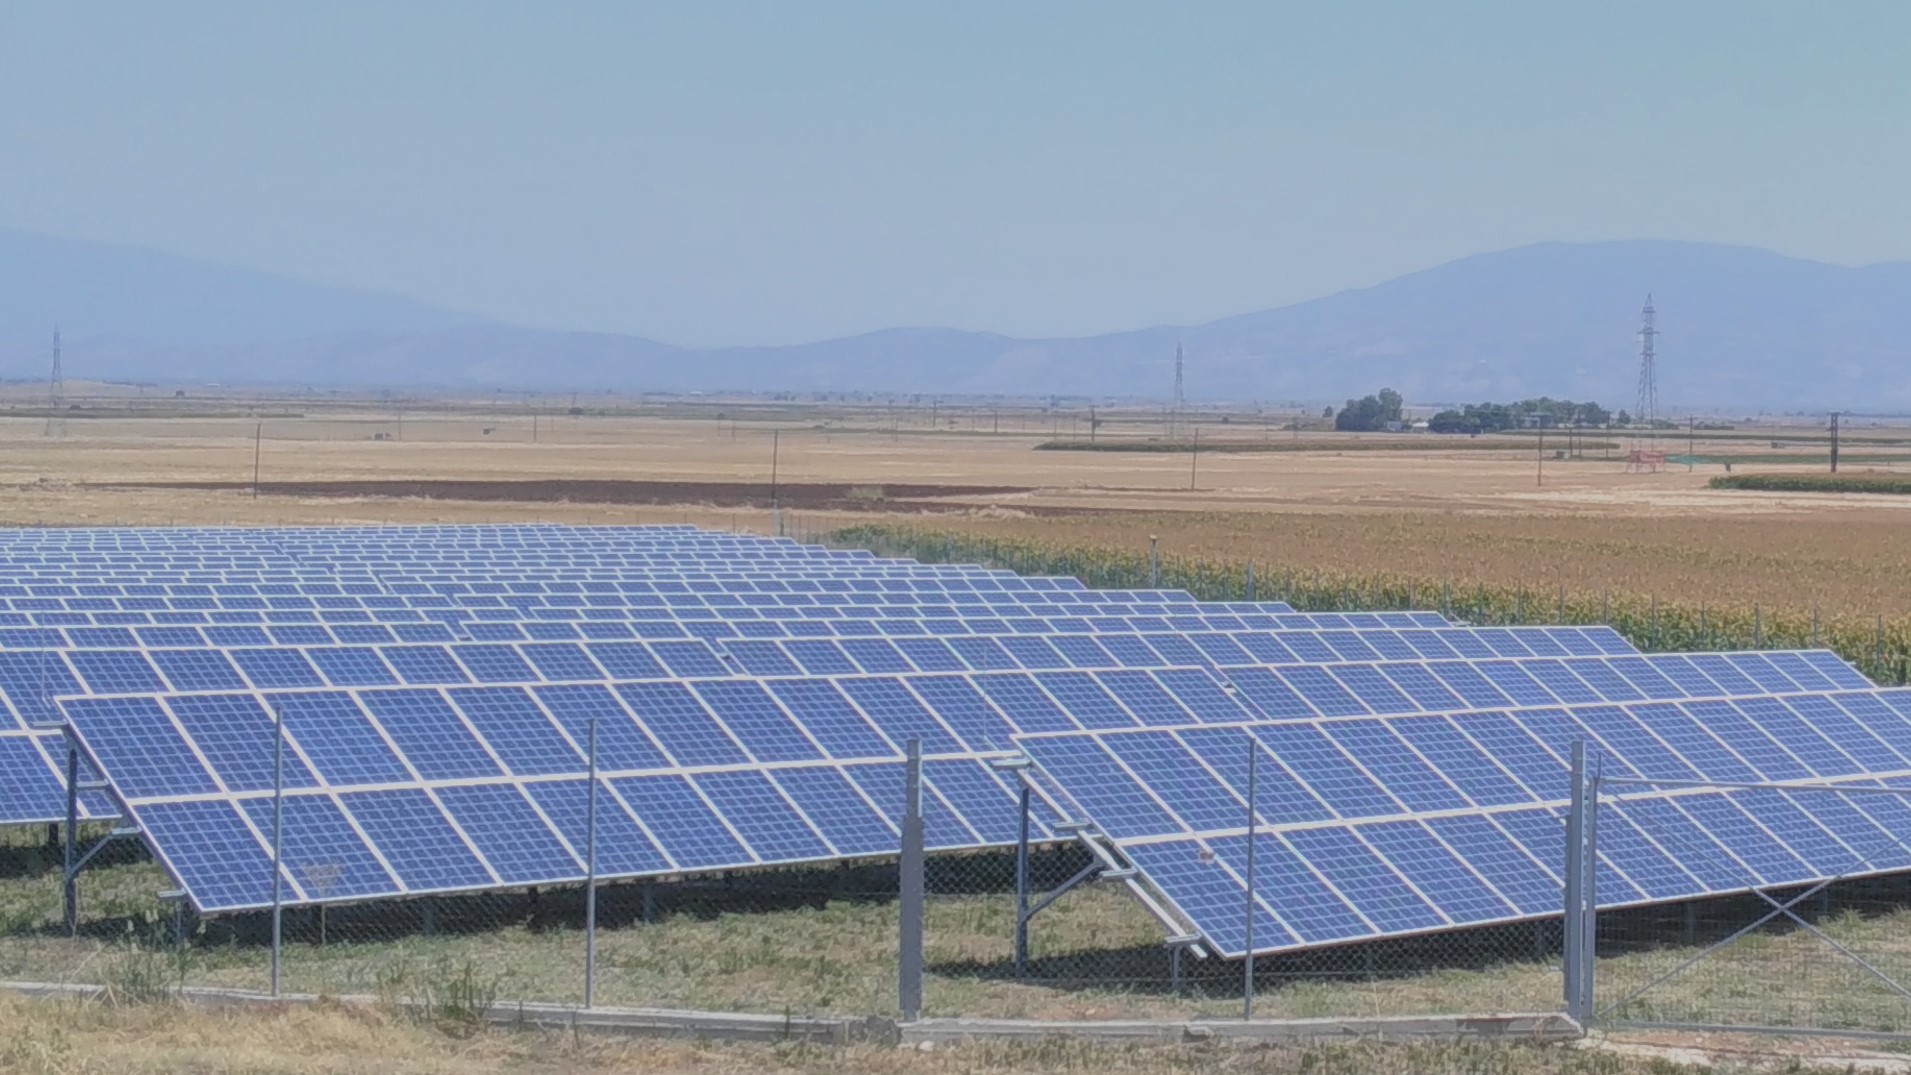 06.04.2021 SolarKapital - Next acquisition in Greece